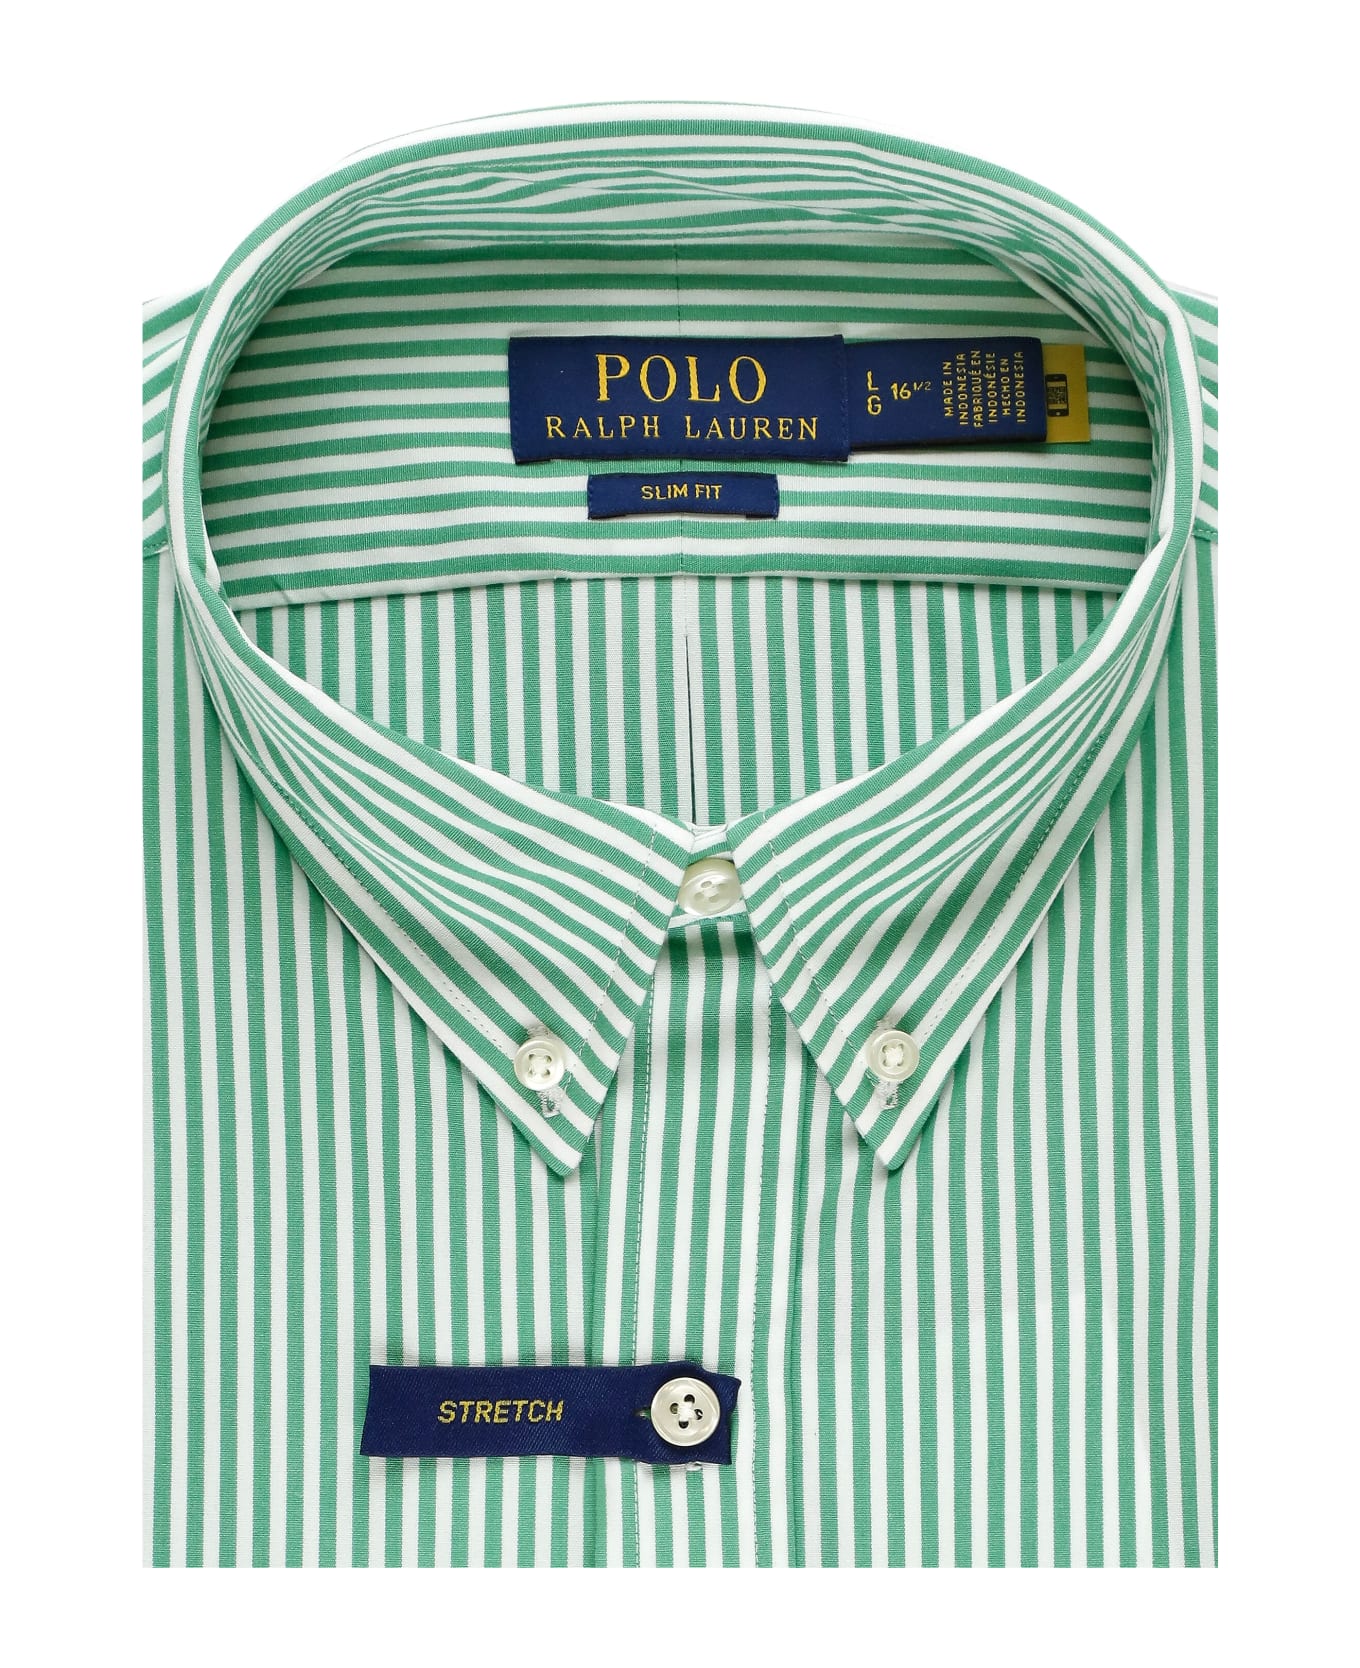 Polo Ralph Lauren Pony Shirt - White and green